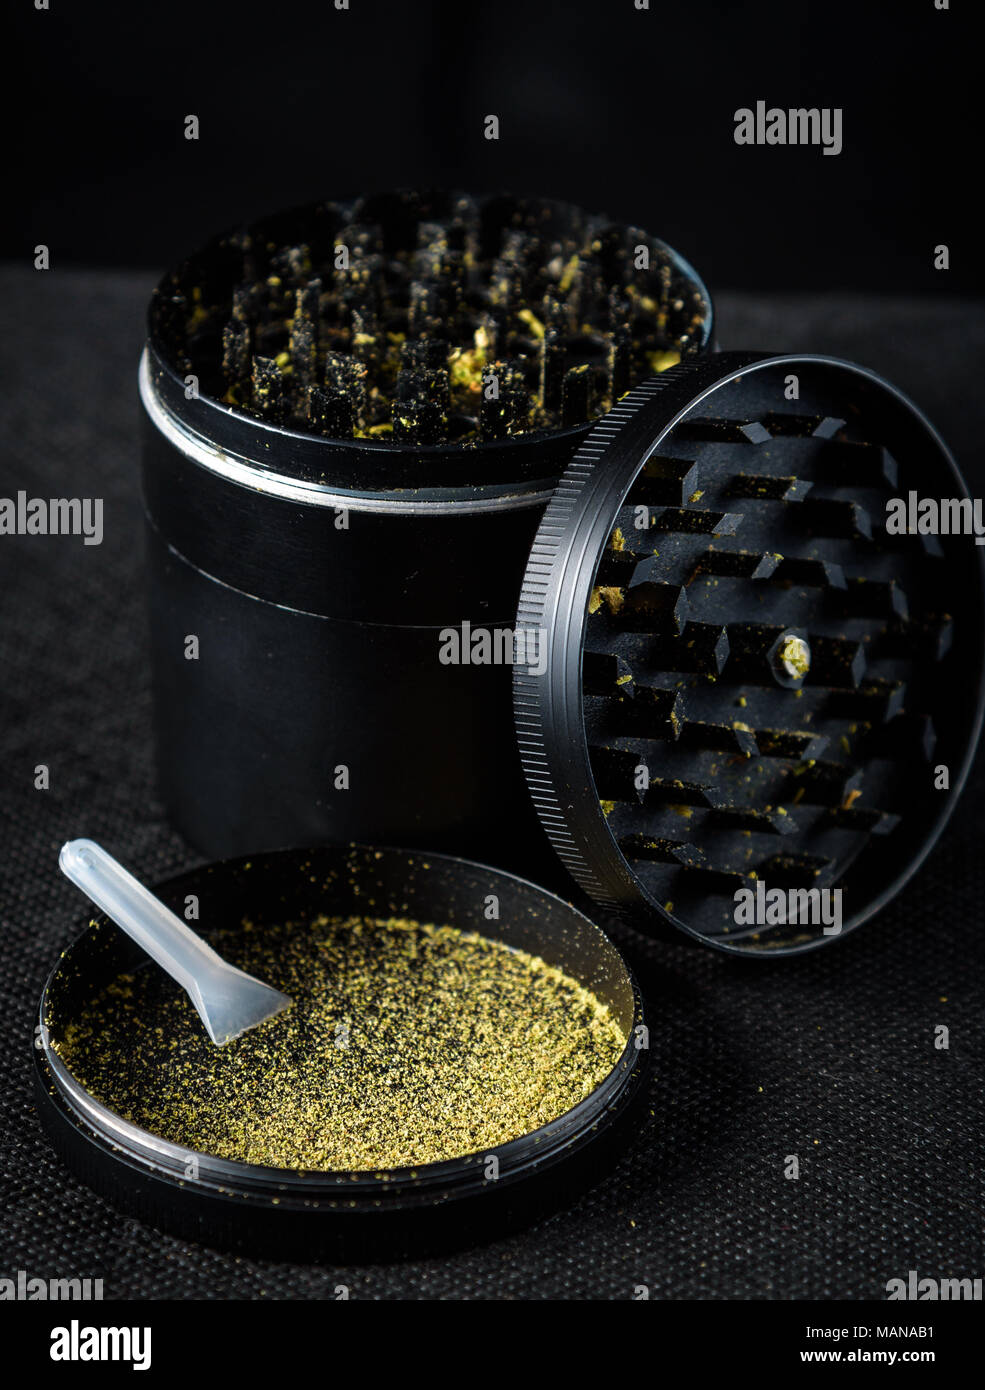 A medicinal marijuana grinder with keef and scraper. Black background Stock  Photo - Alamy